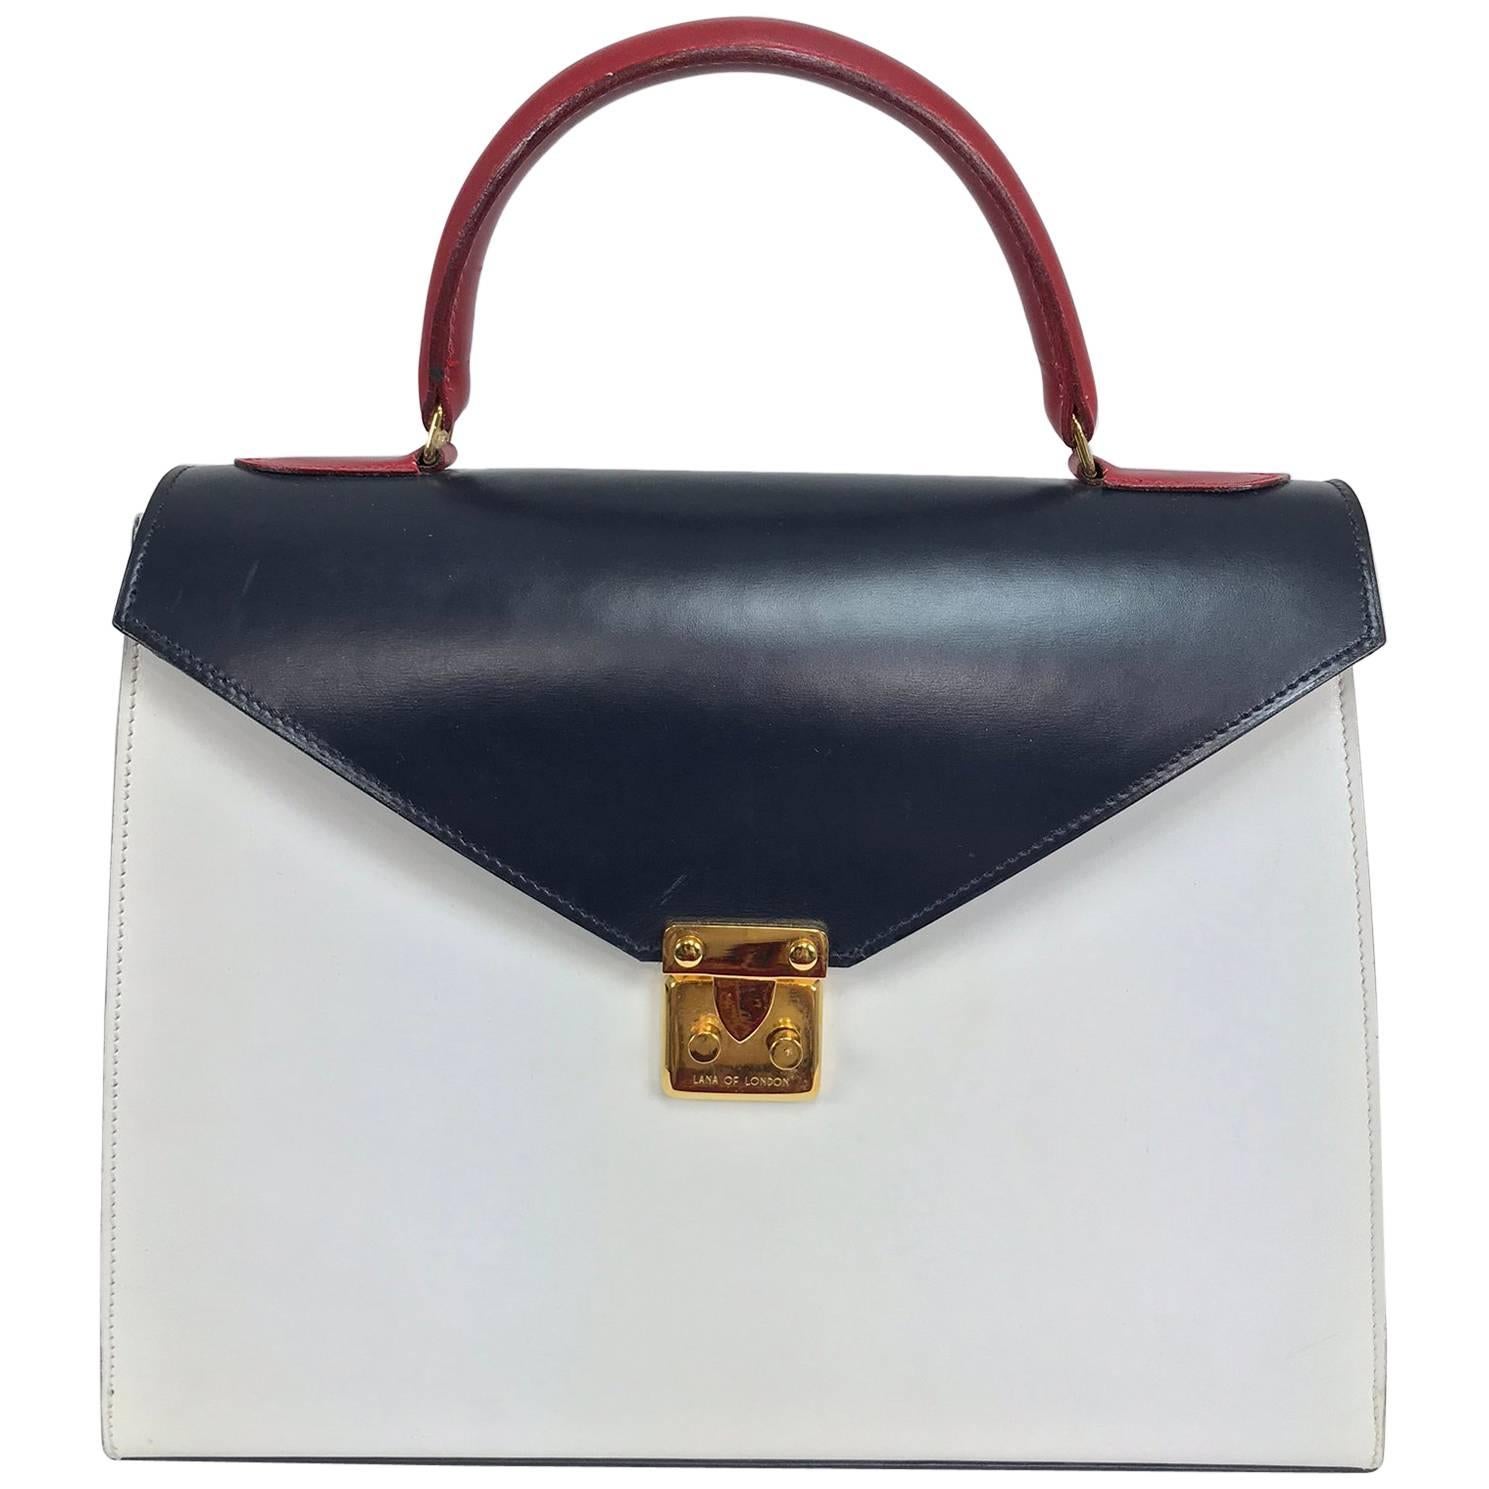 Lana of London red white and blue box calf handbag gold hardware